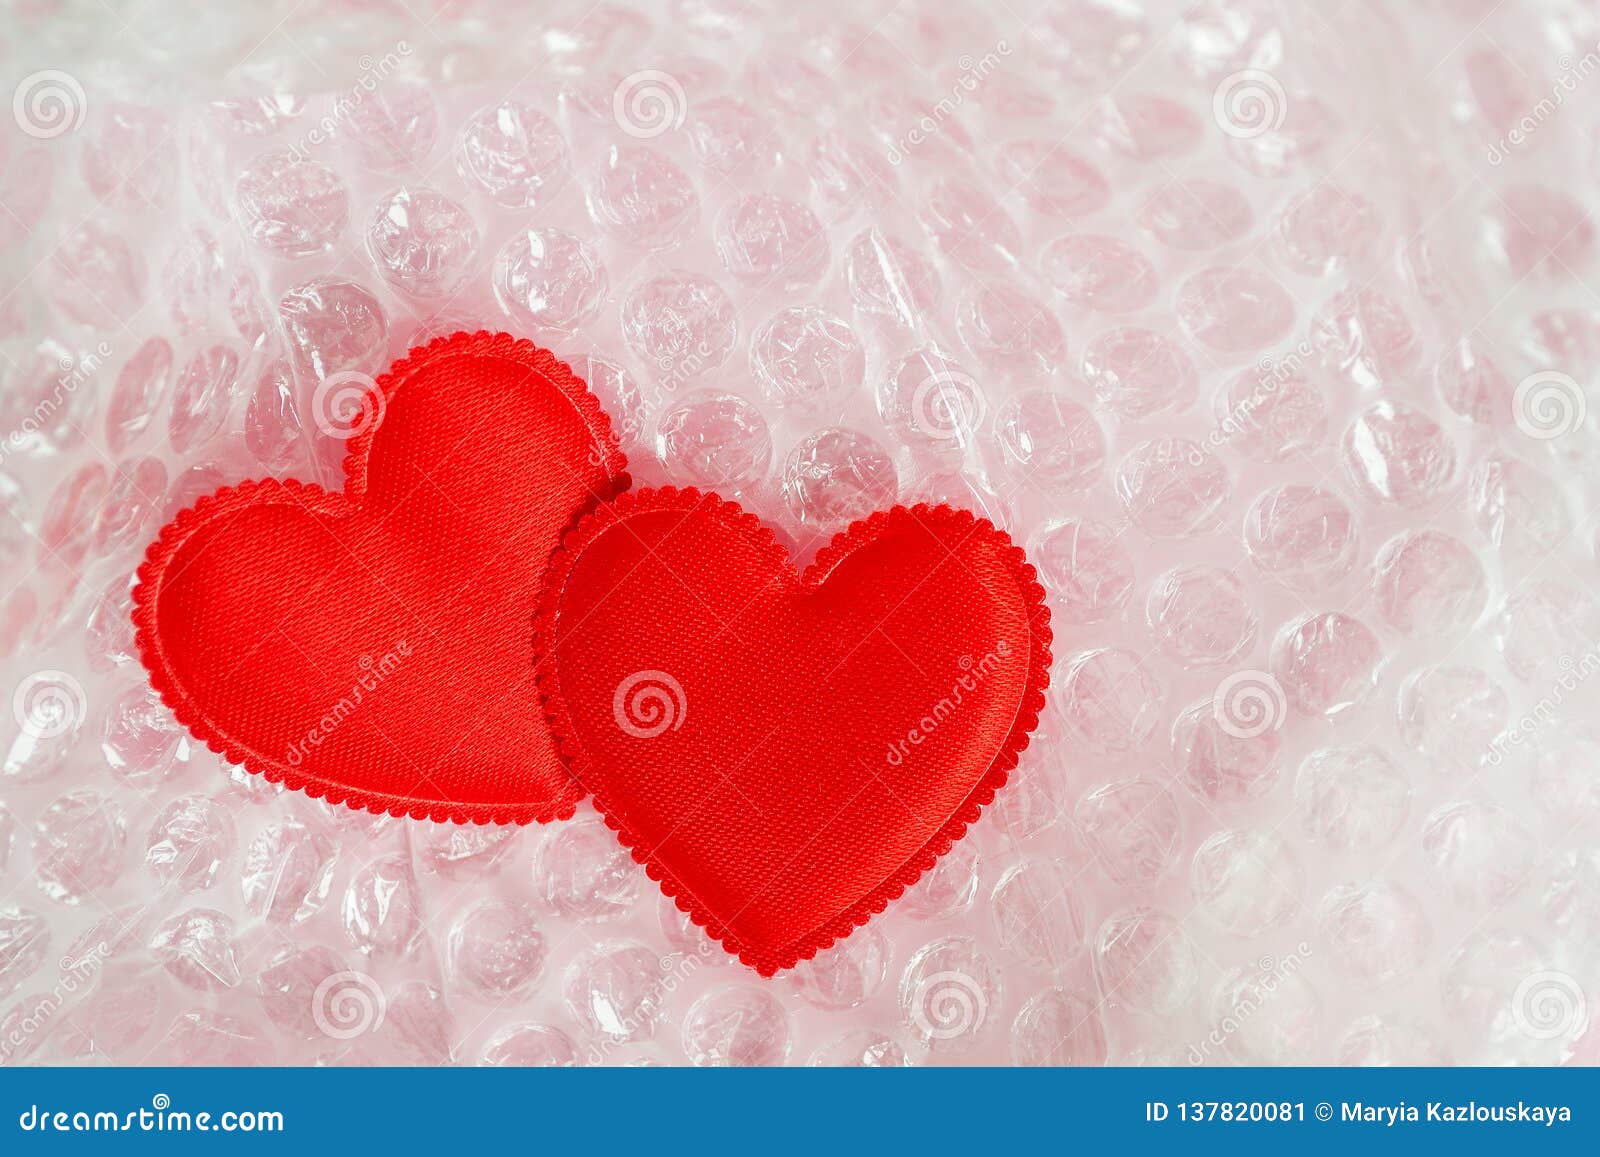 Pink Bubble Wrap Heart Shape Stock Photo 374297425